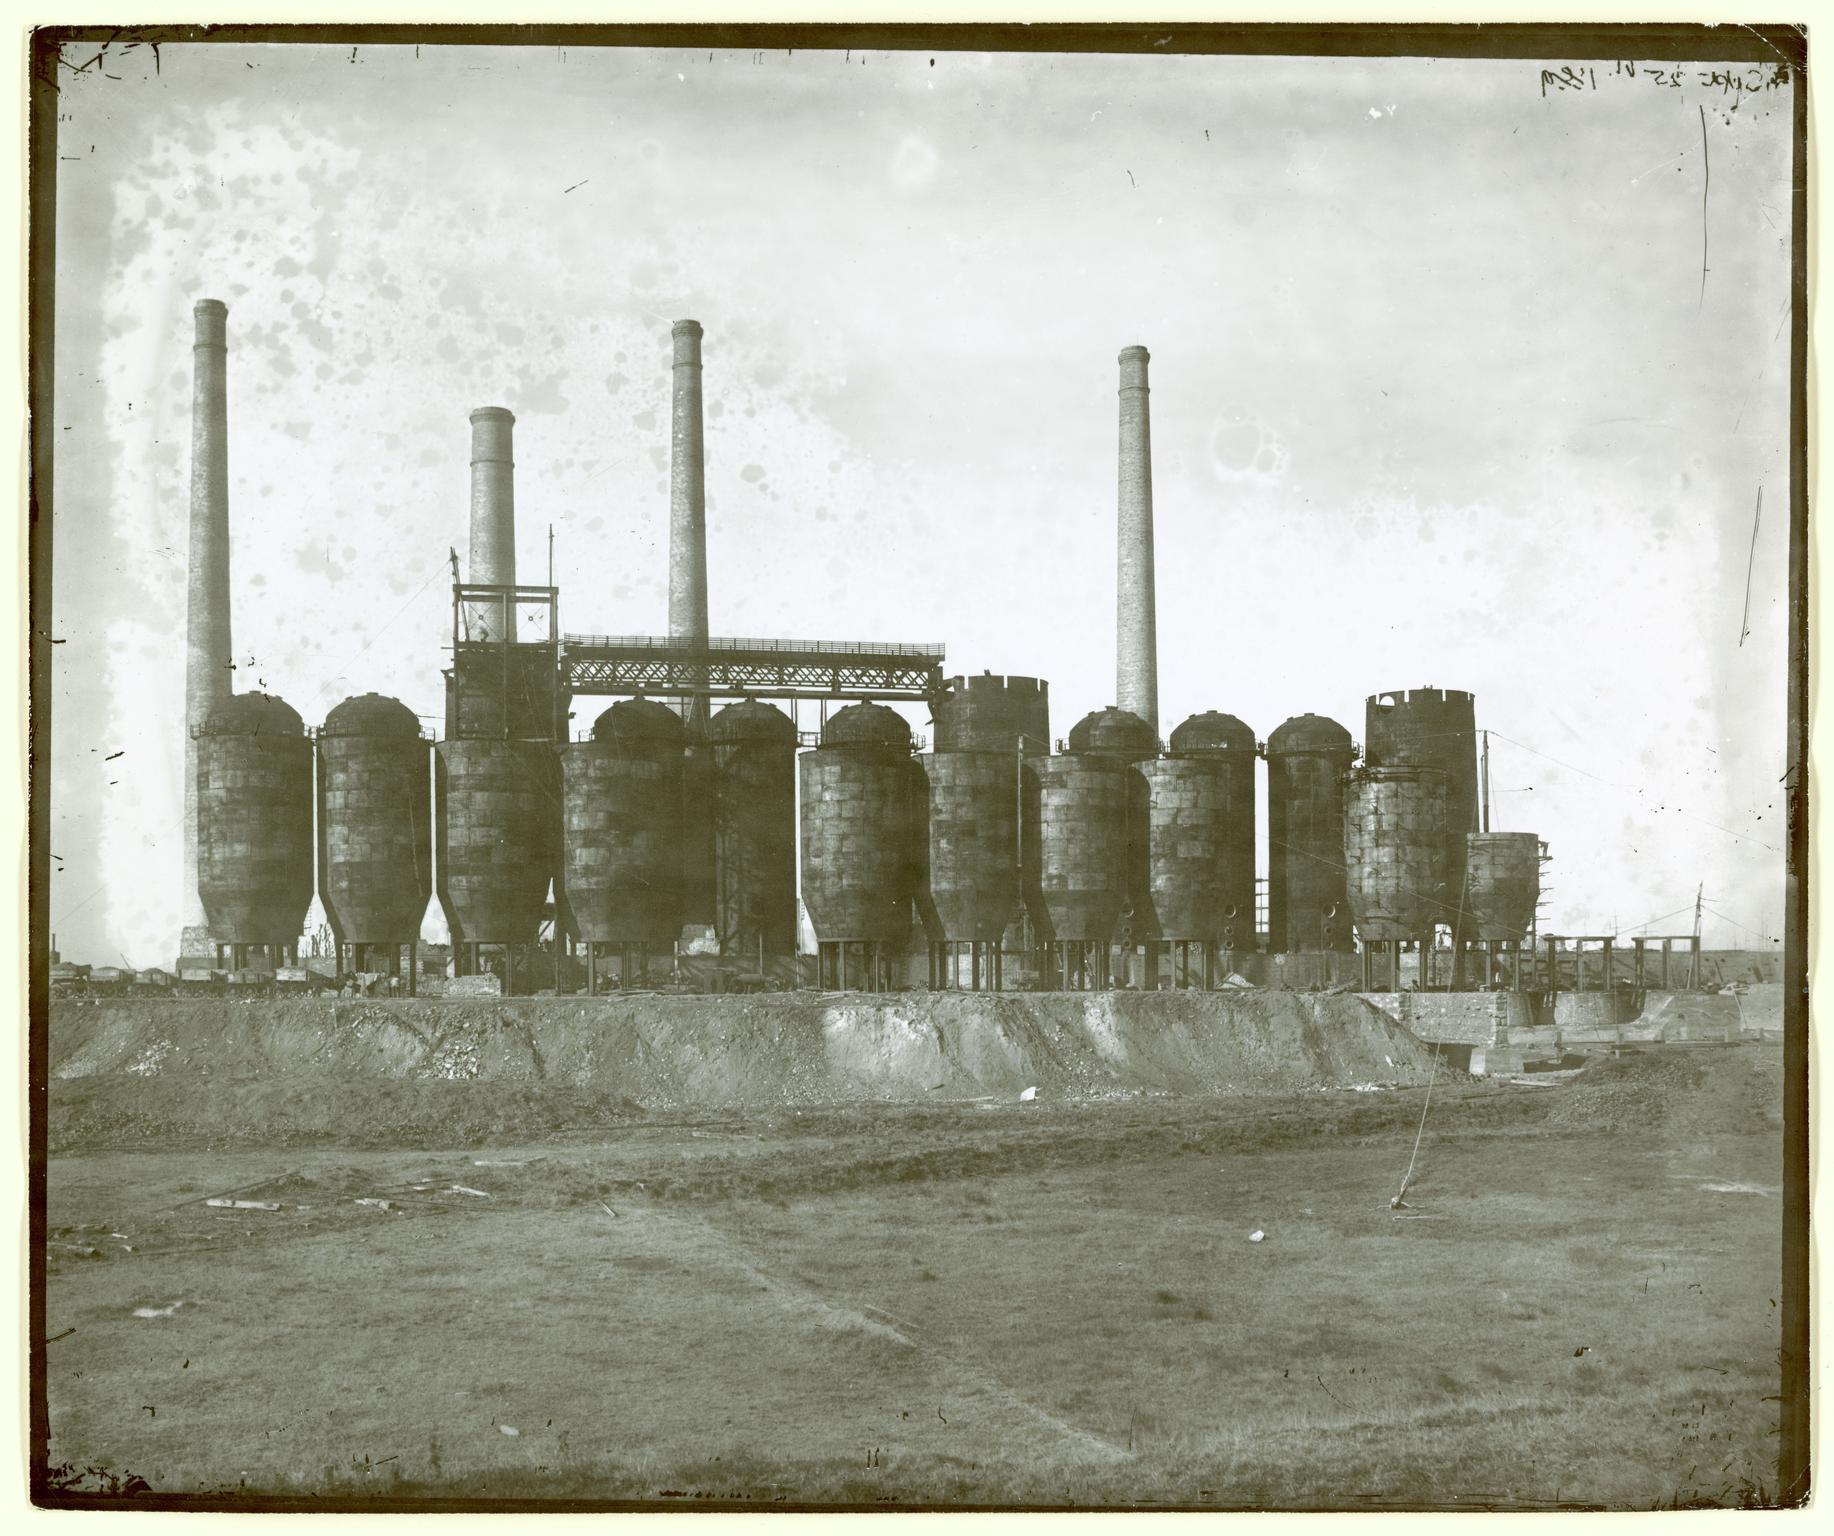 East Moors iron & steelworks, Cardiff, photograph